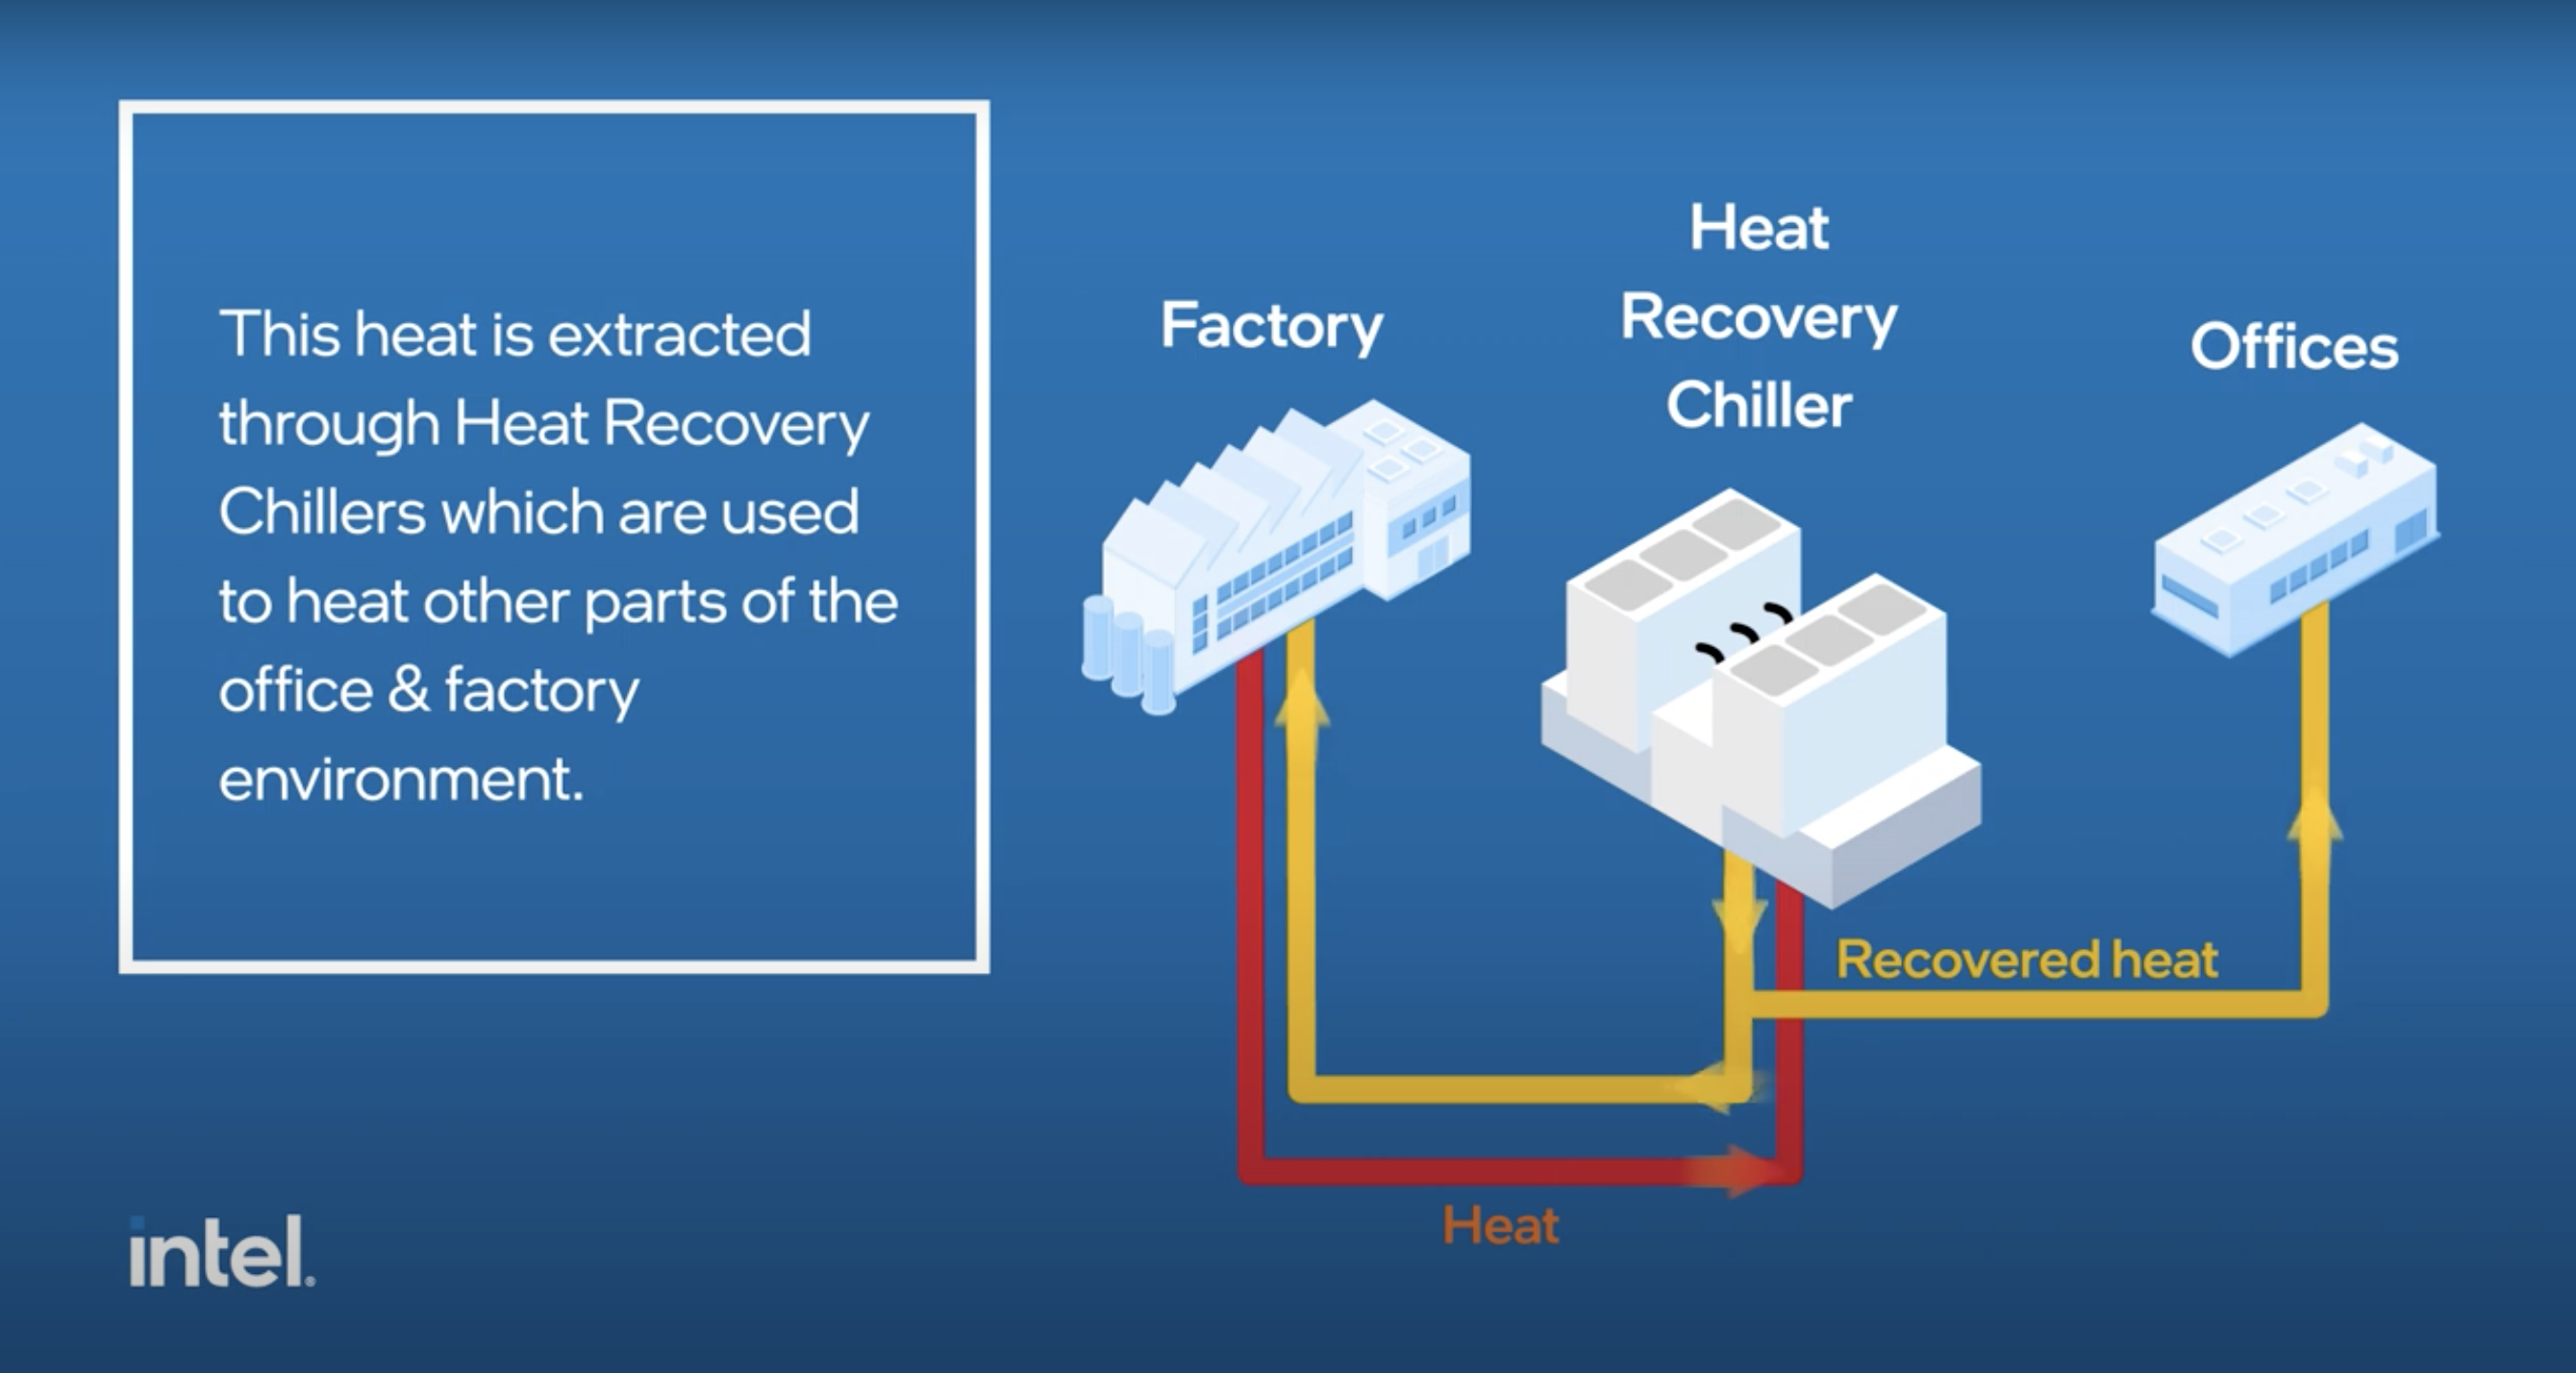 Intel heat recovery